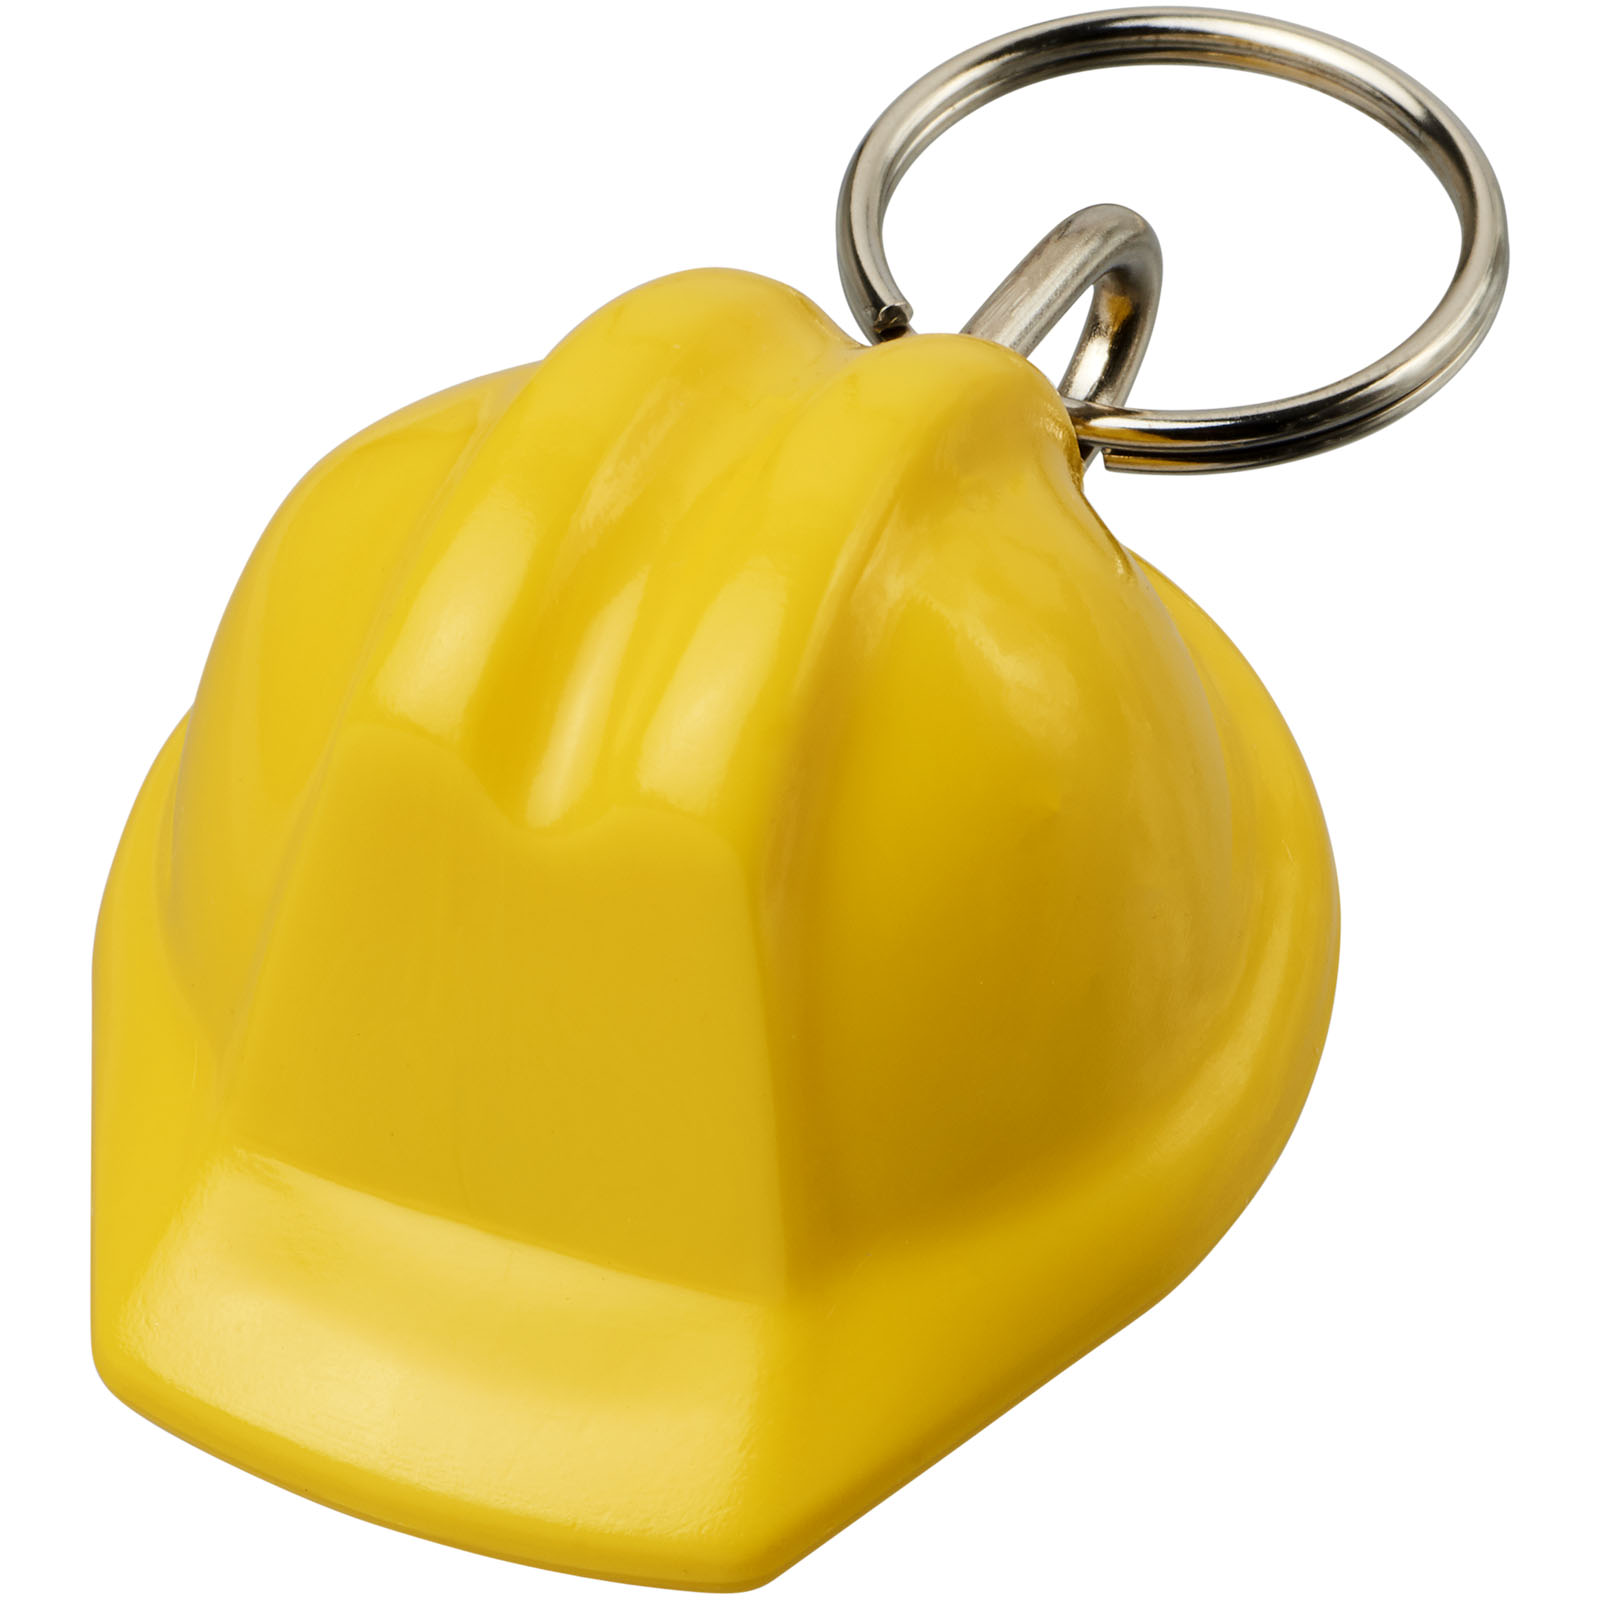 Advertising Keychains & Keyrings - Kolt hard hat-shaped recycled keychain